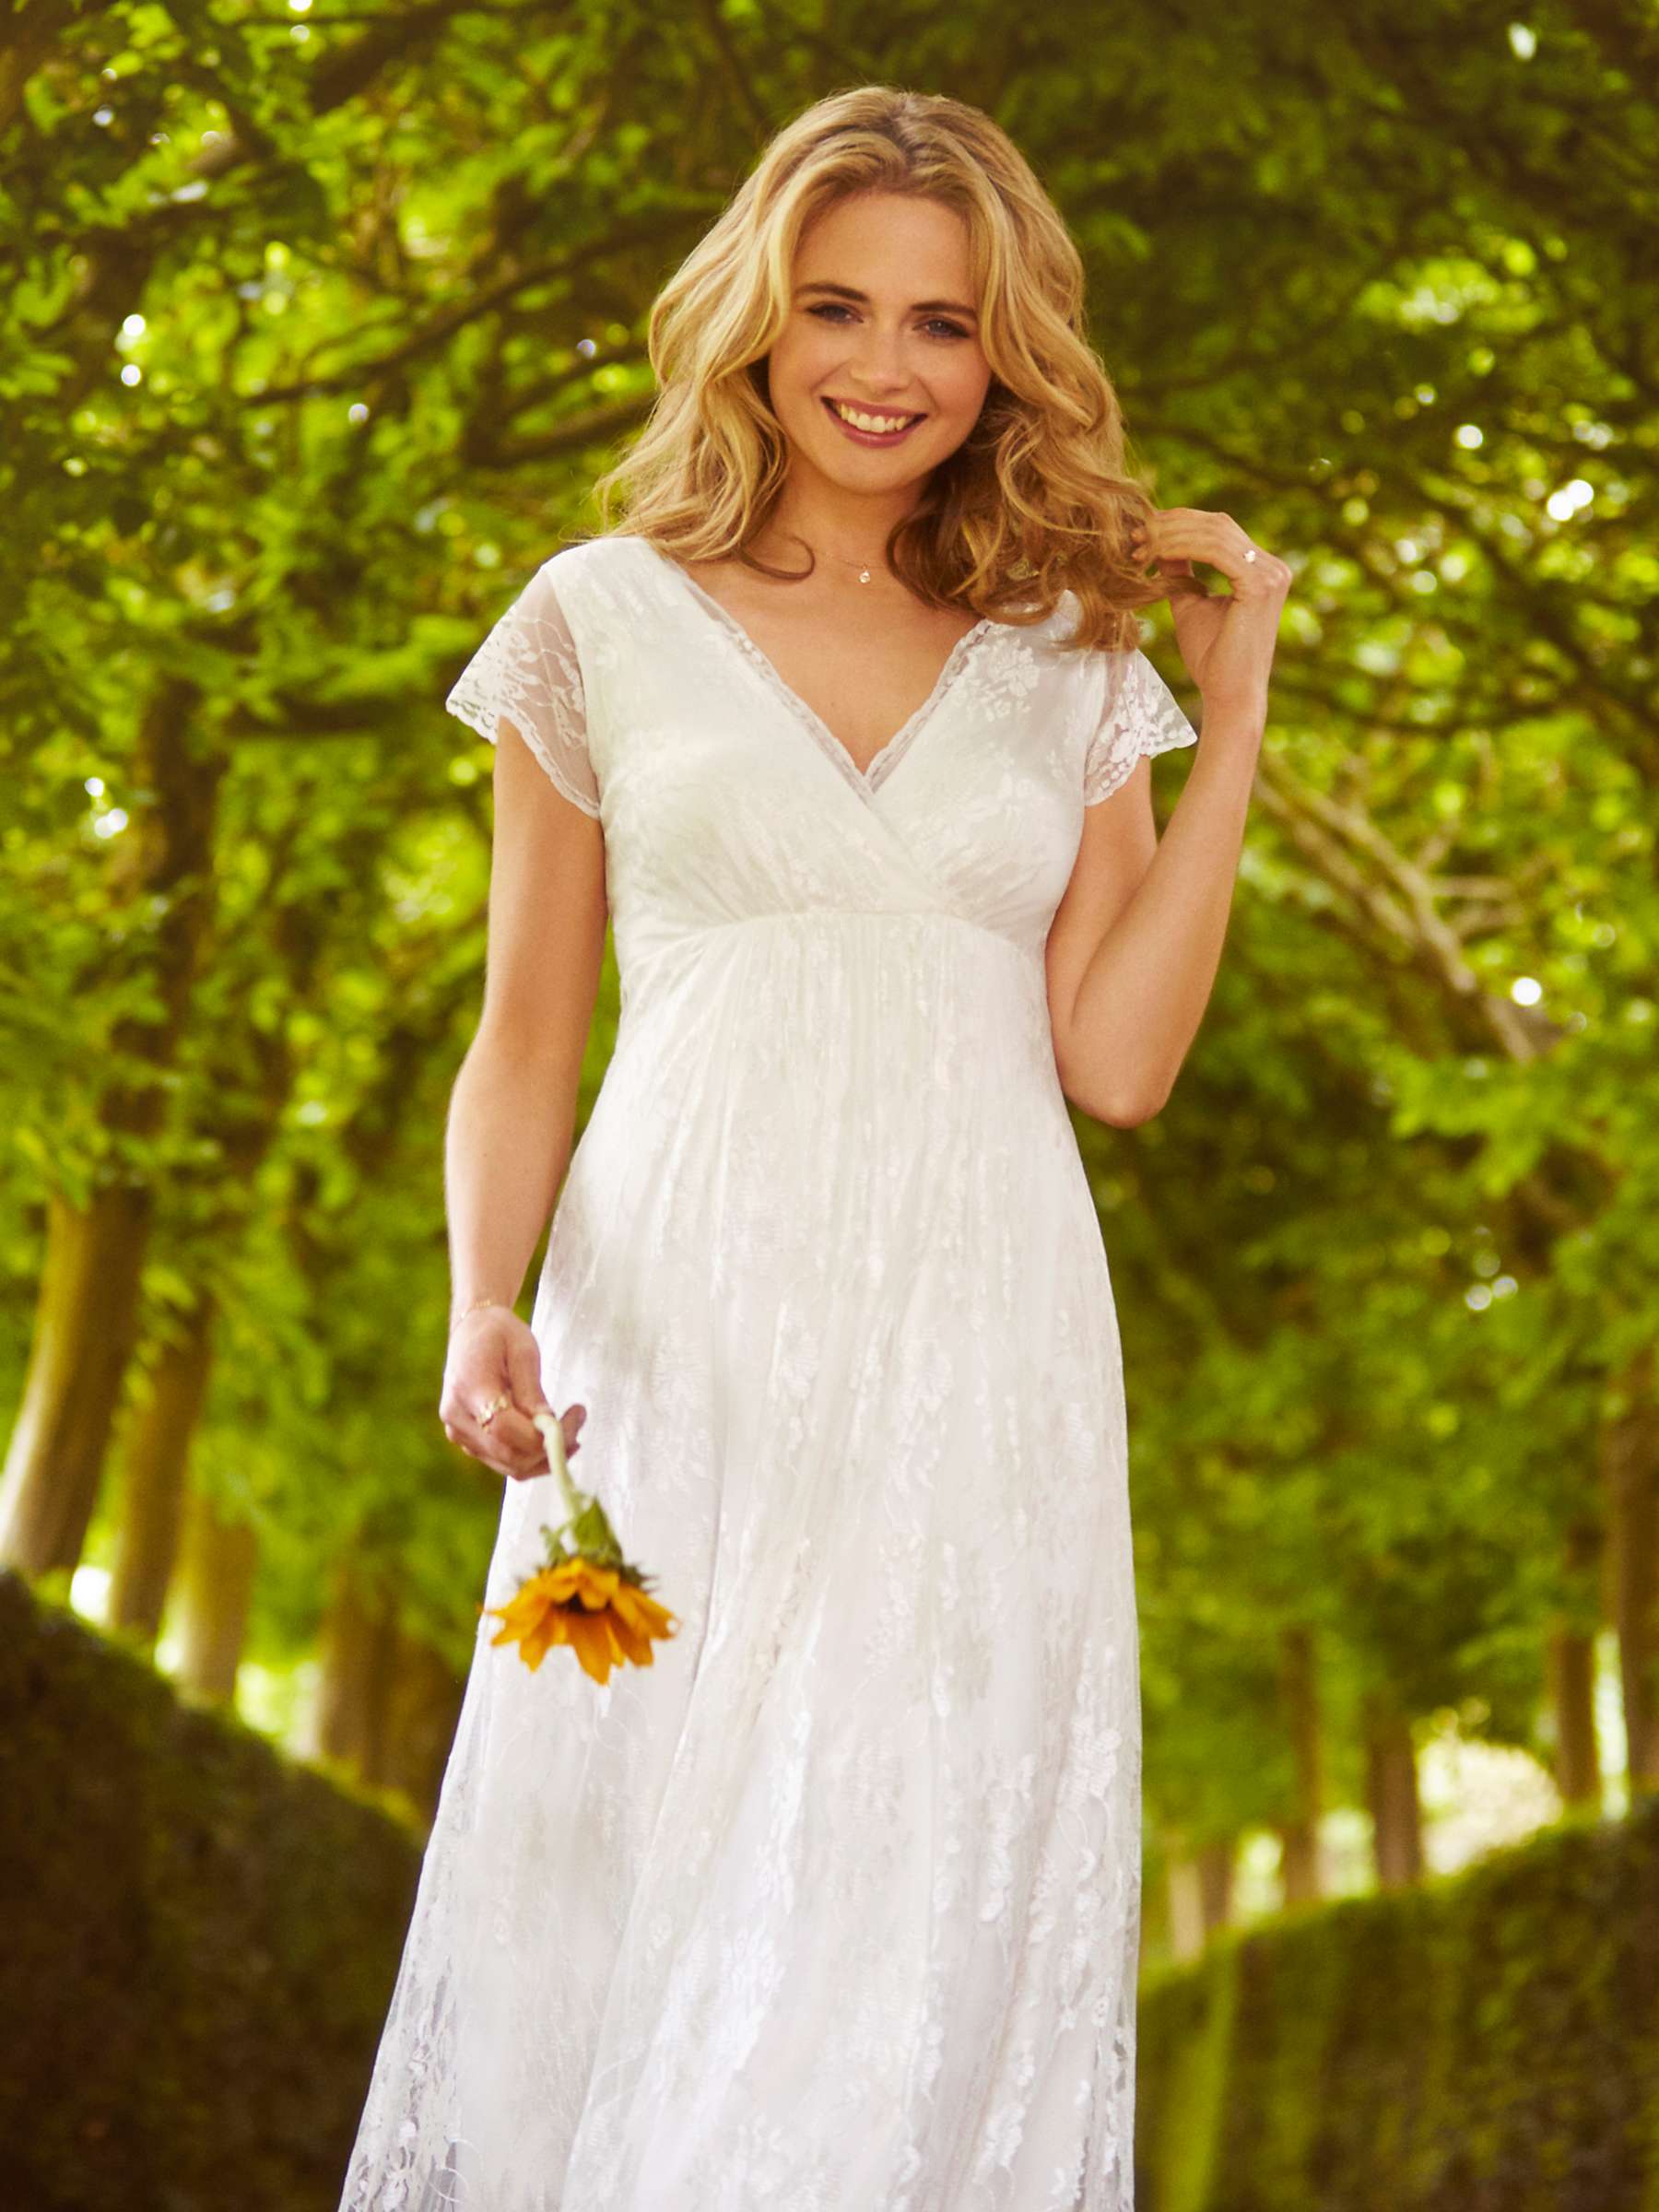 Buy Alie Street Evangeline Intricate Lace Wedding Dress, Ivory Dream Online at johnlewis.com